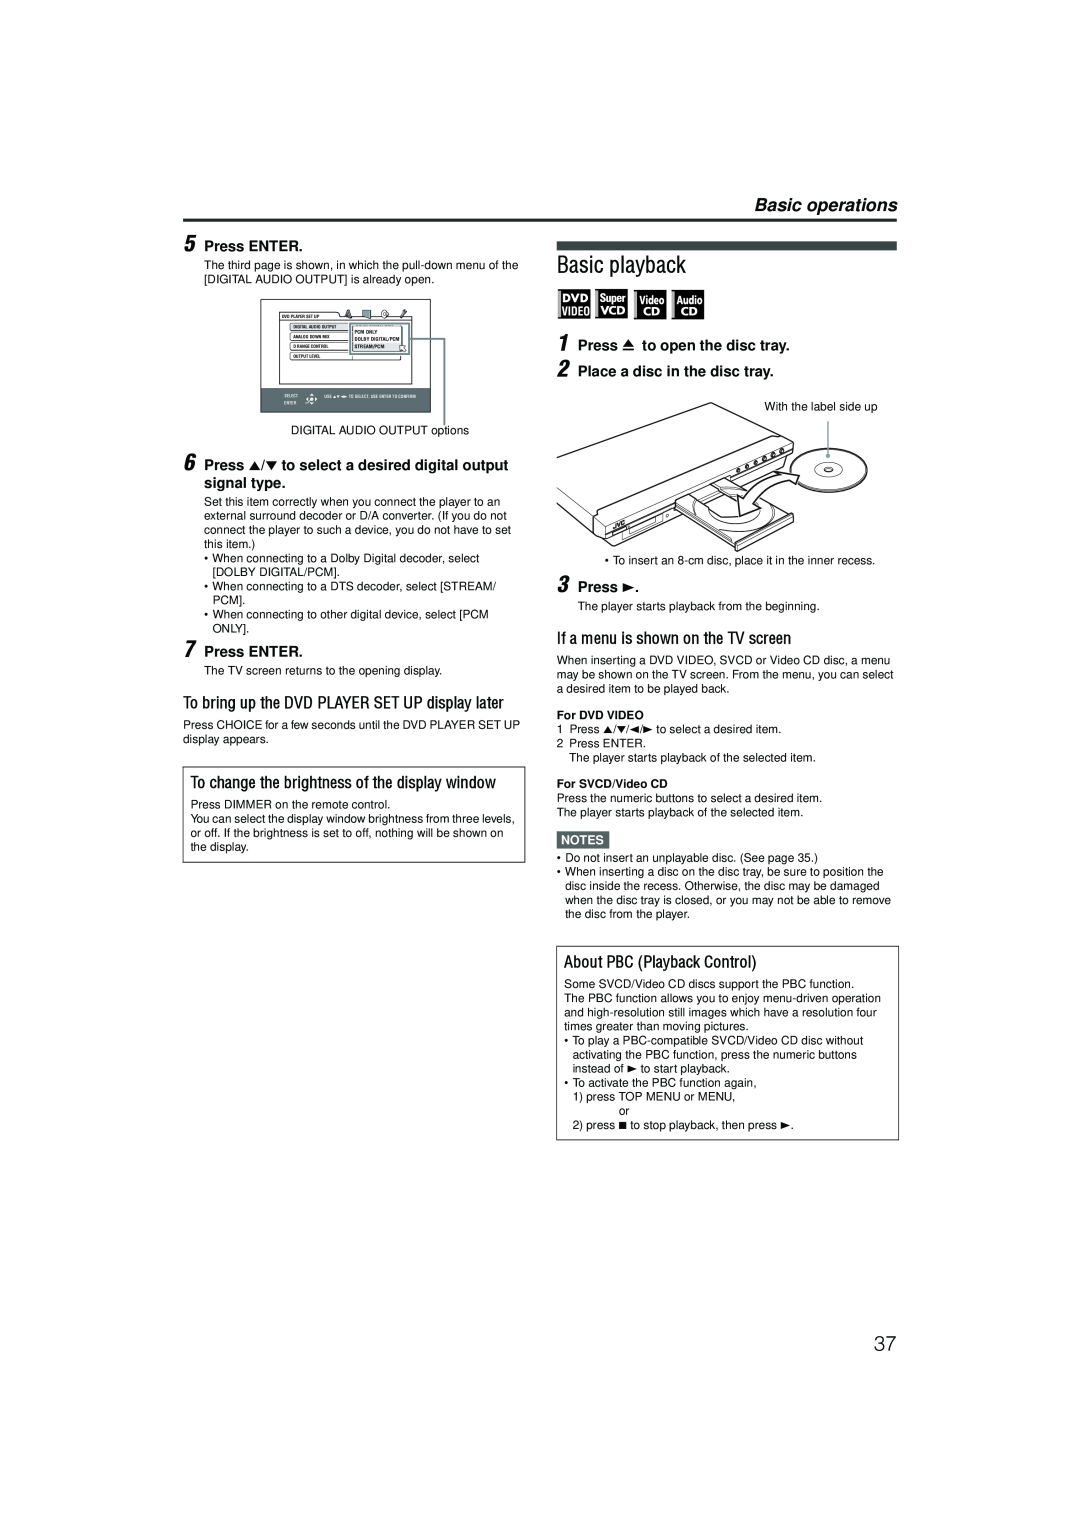 JVC LVT1002-001B manual Basic playback, If a menu is shown on the TV screen, About PBC Playback Control, Press ENTER 